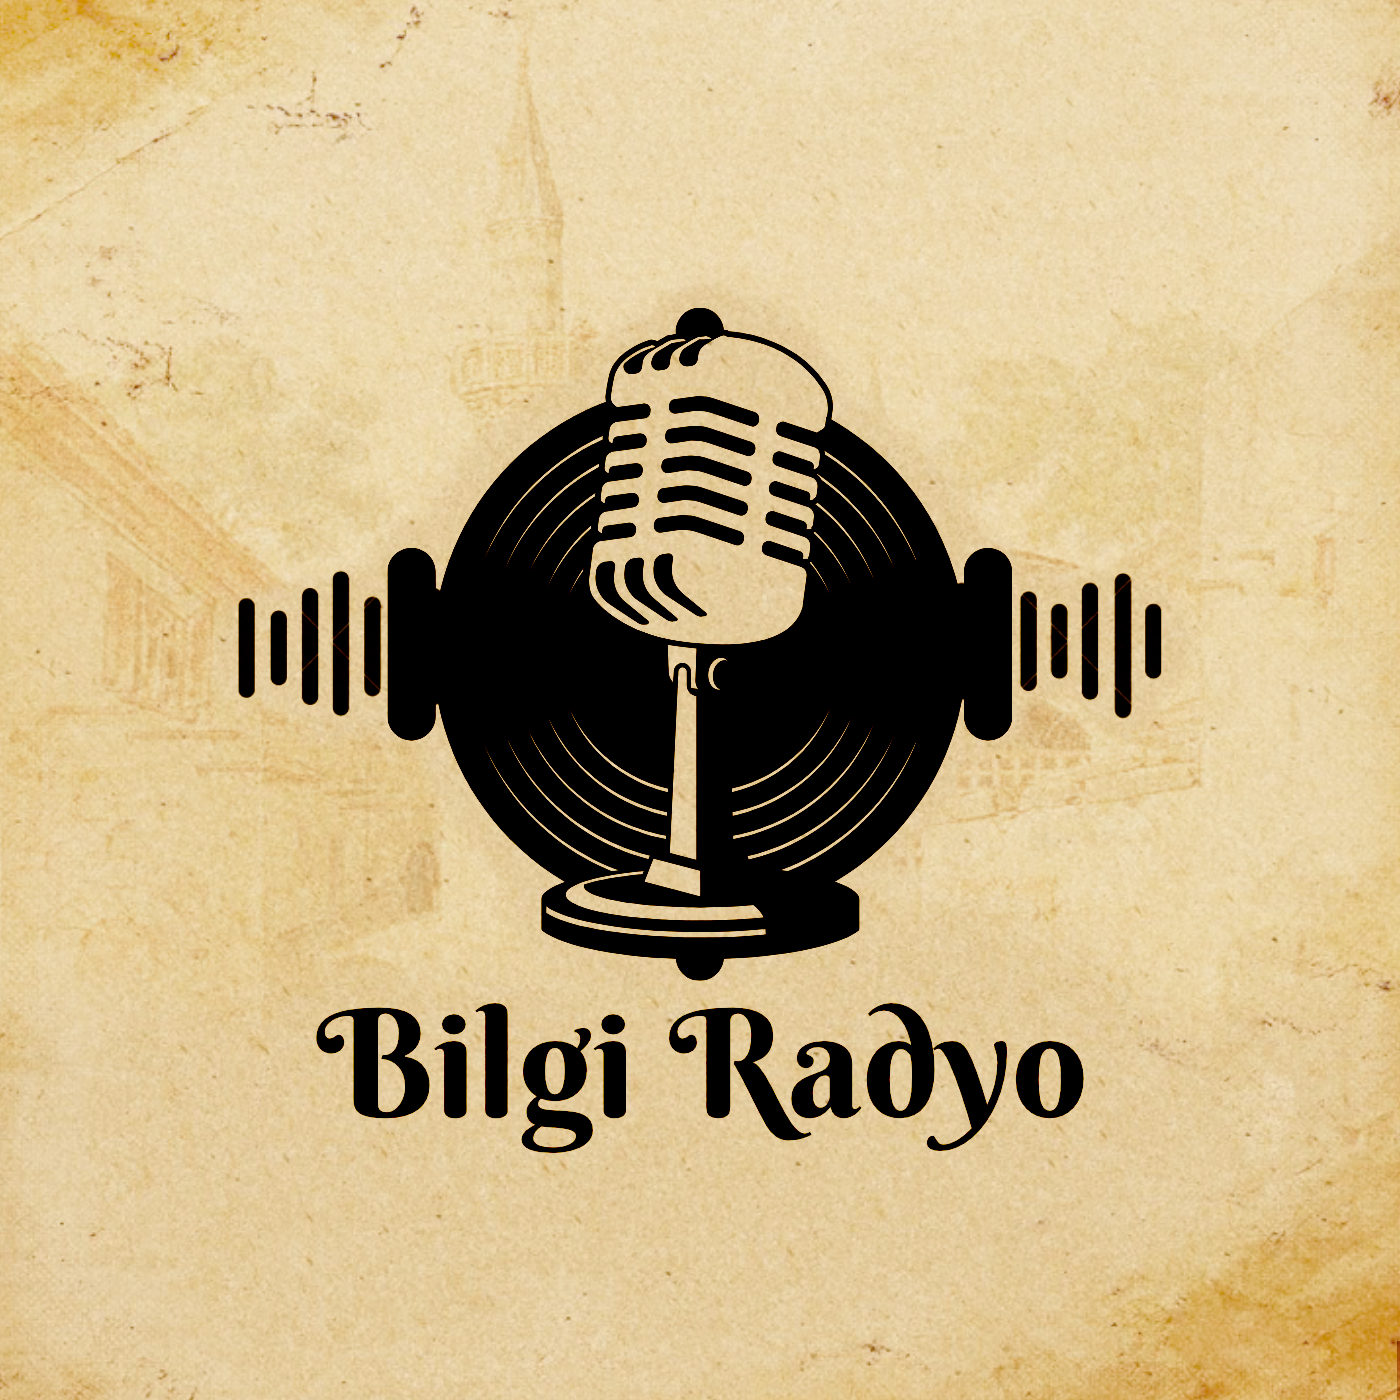 Bilgi Radyo Podcast RSS Linki